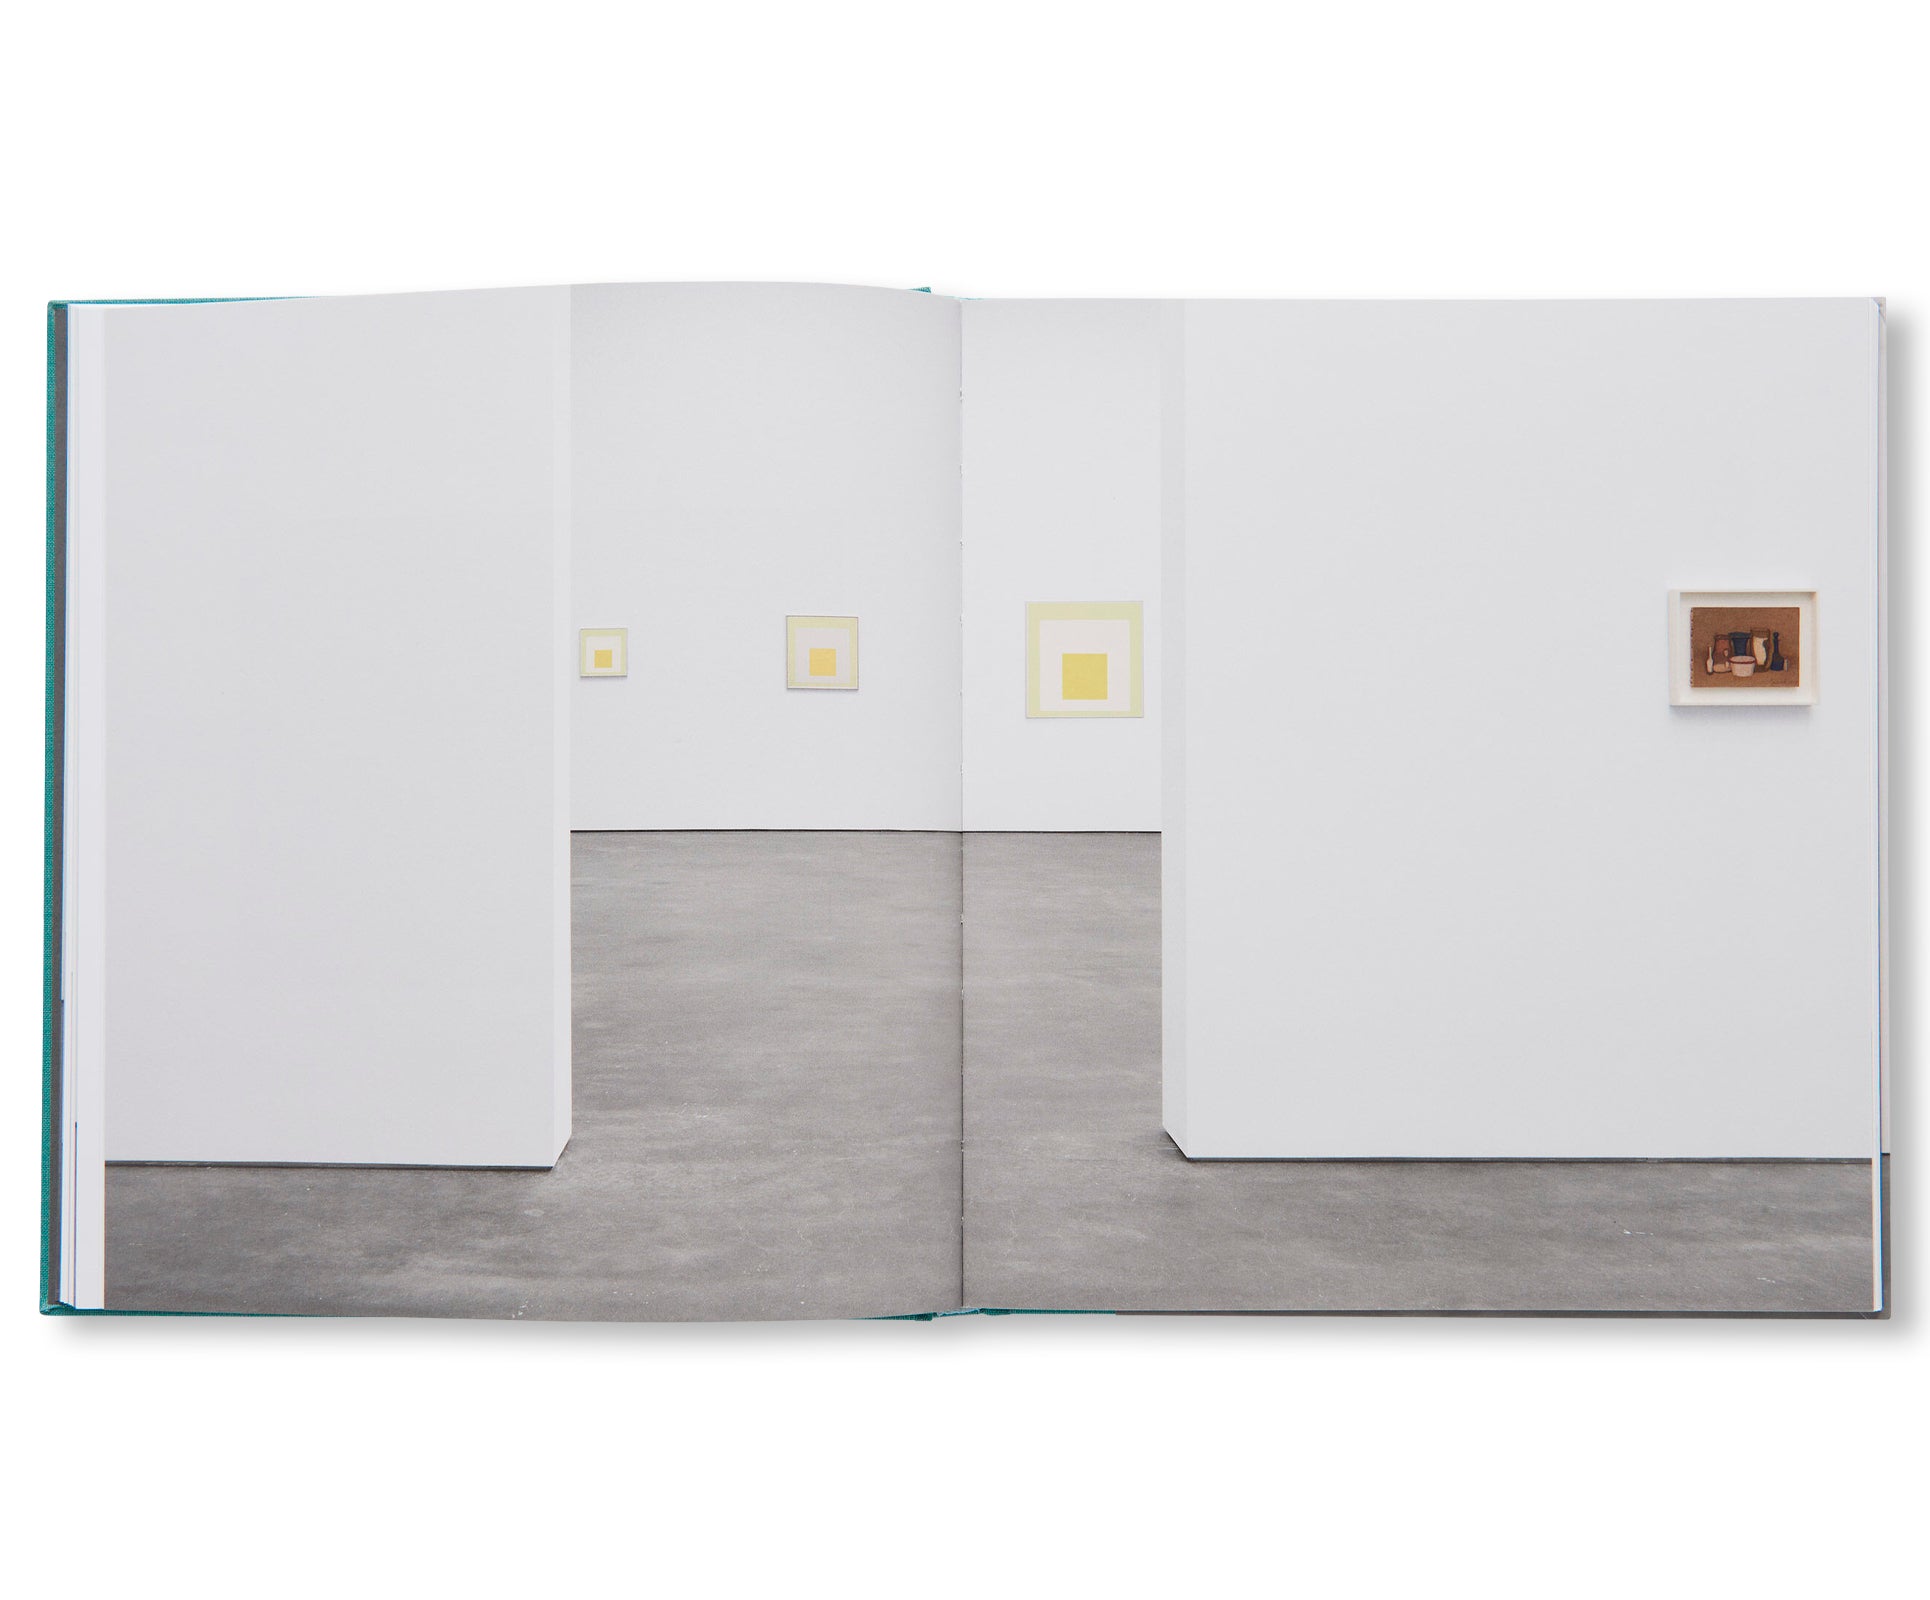 ALBERS AND MORANDI: NEVER FINISHED by Josef Albers, Giorgio Morandi